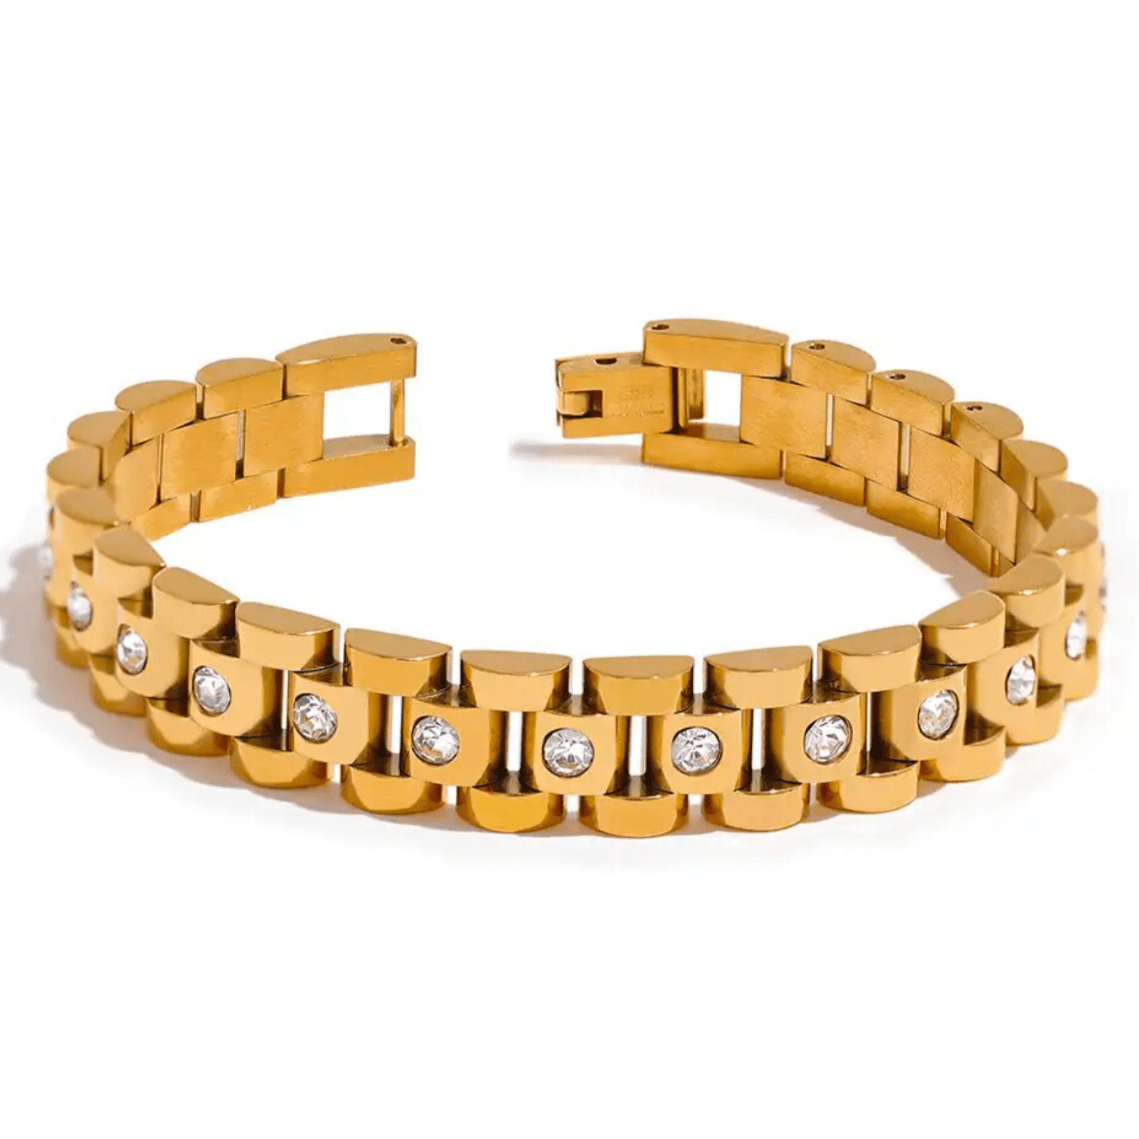 Chain stone bracelet - 𝐇𝐨𝐧𝐞𝐲 𝐁𝐮𝐭𝐭𝐞𝐫 𝐍𝐢𝐧𝐞